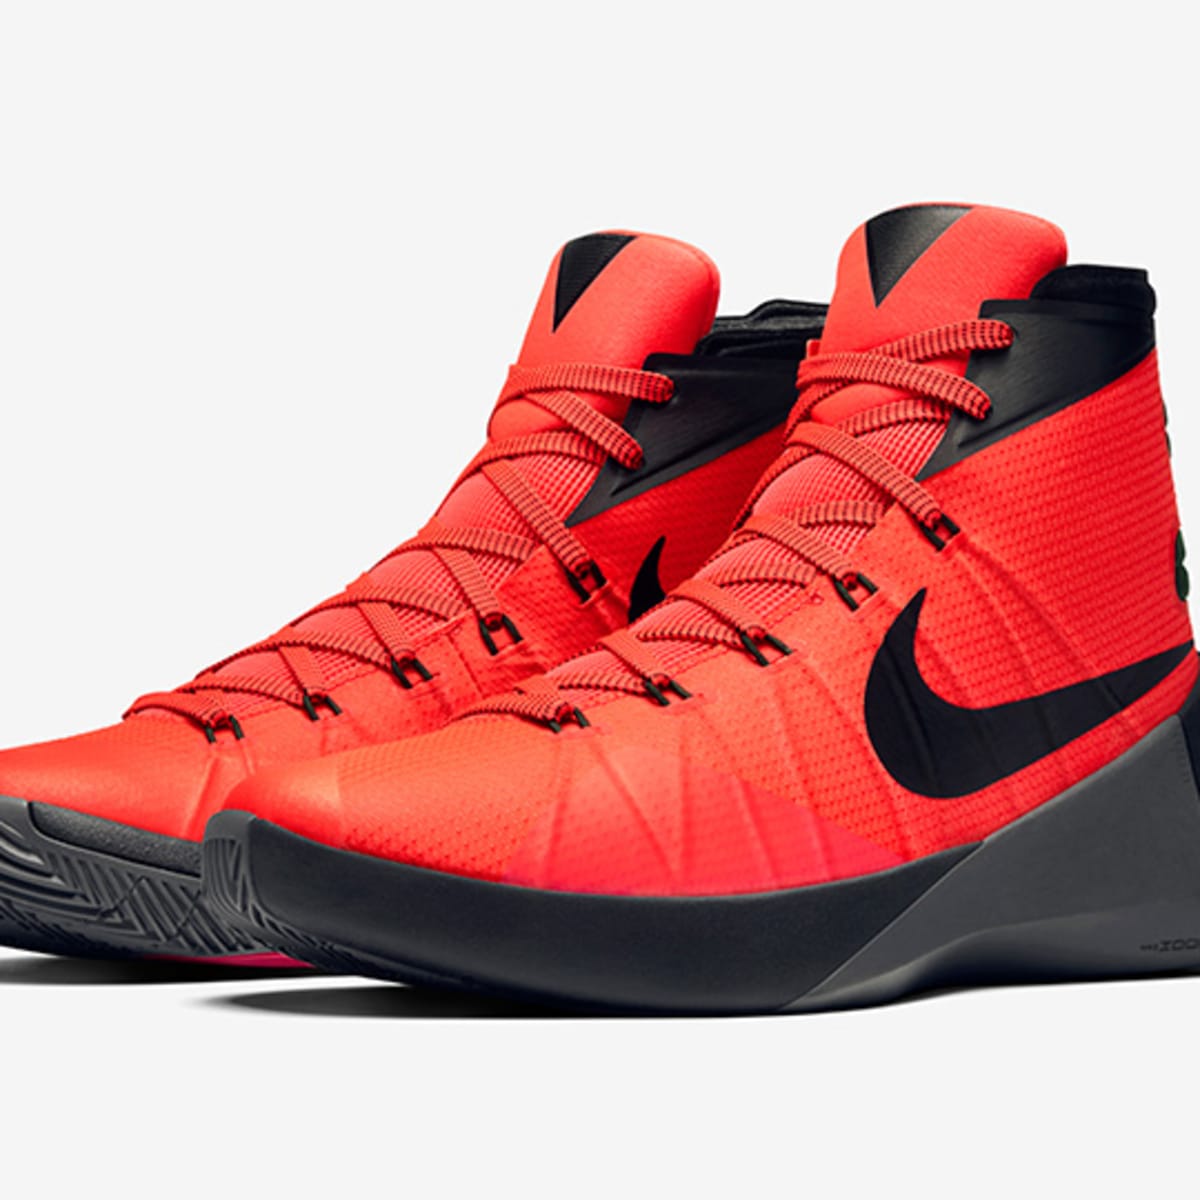 Nike Latest Hyperdunk Is the NBA's Most Popular Shoe